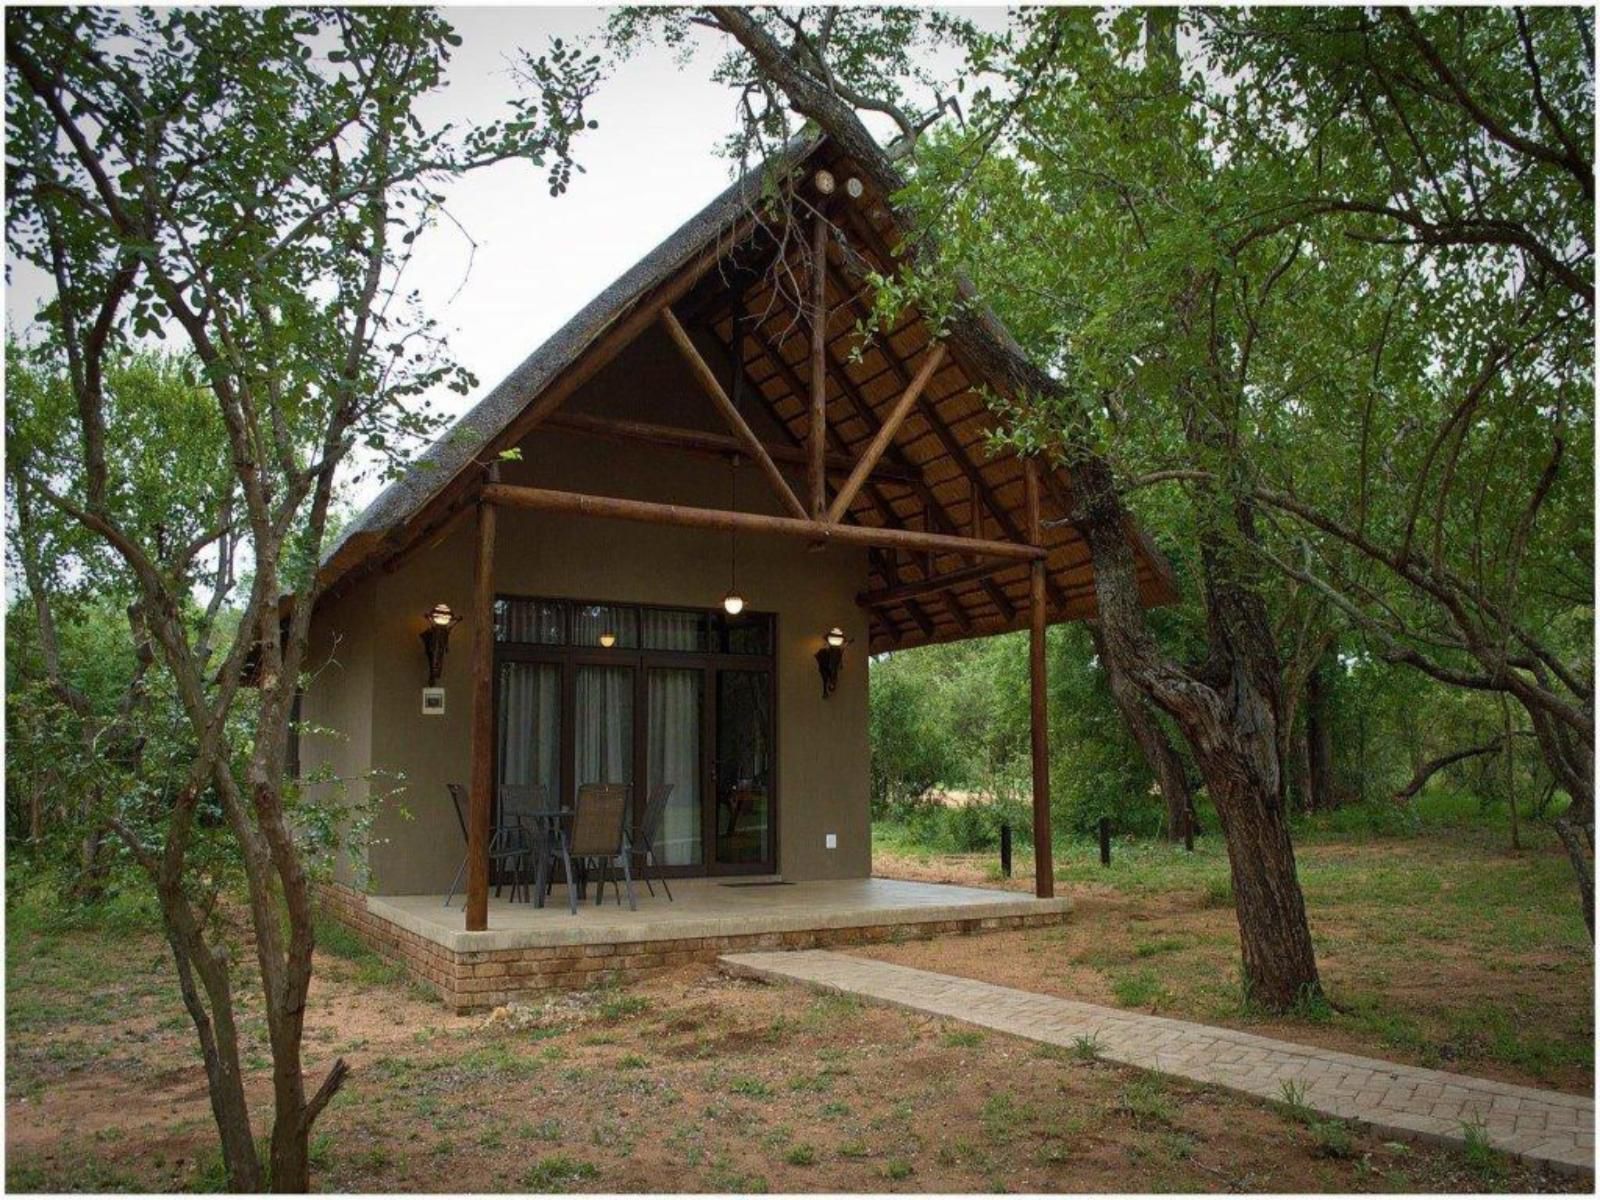 Klavati Game Lodge Hoedspruit Limpopo Province South Africa Cabin, Building, Architecture